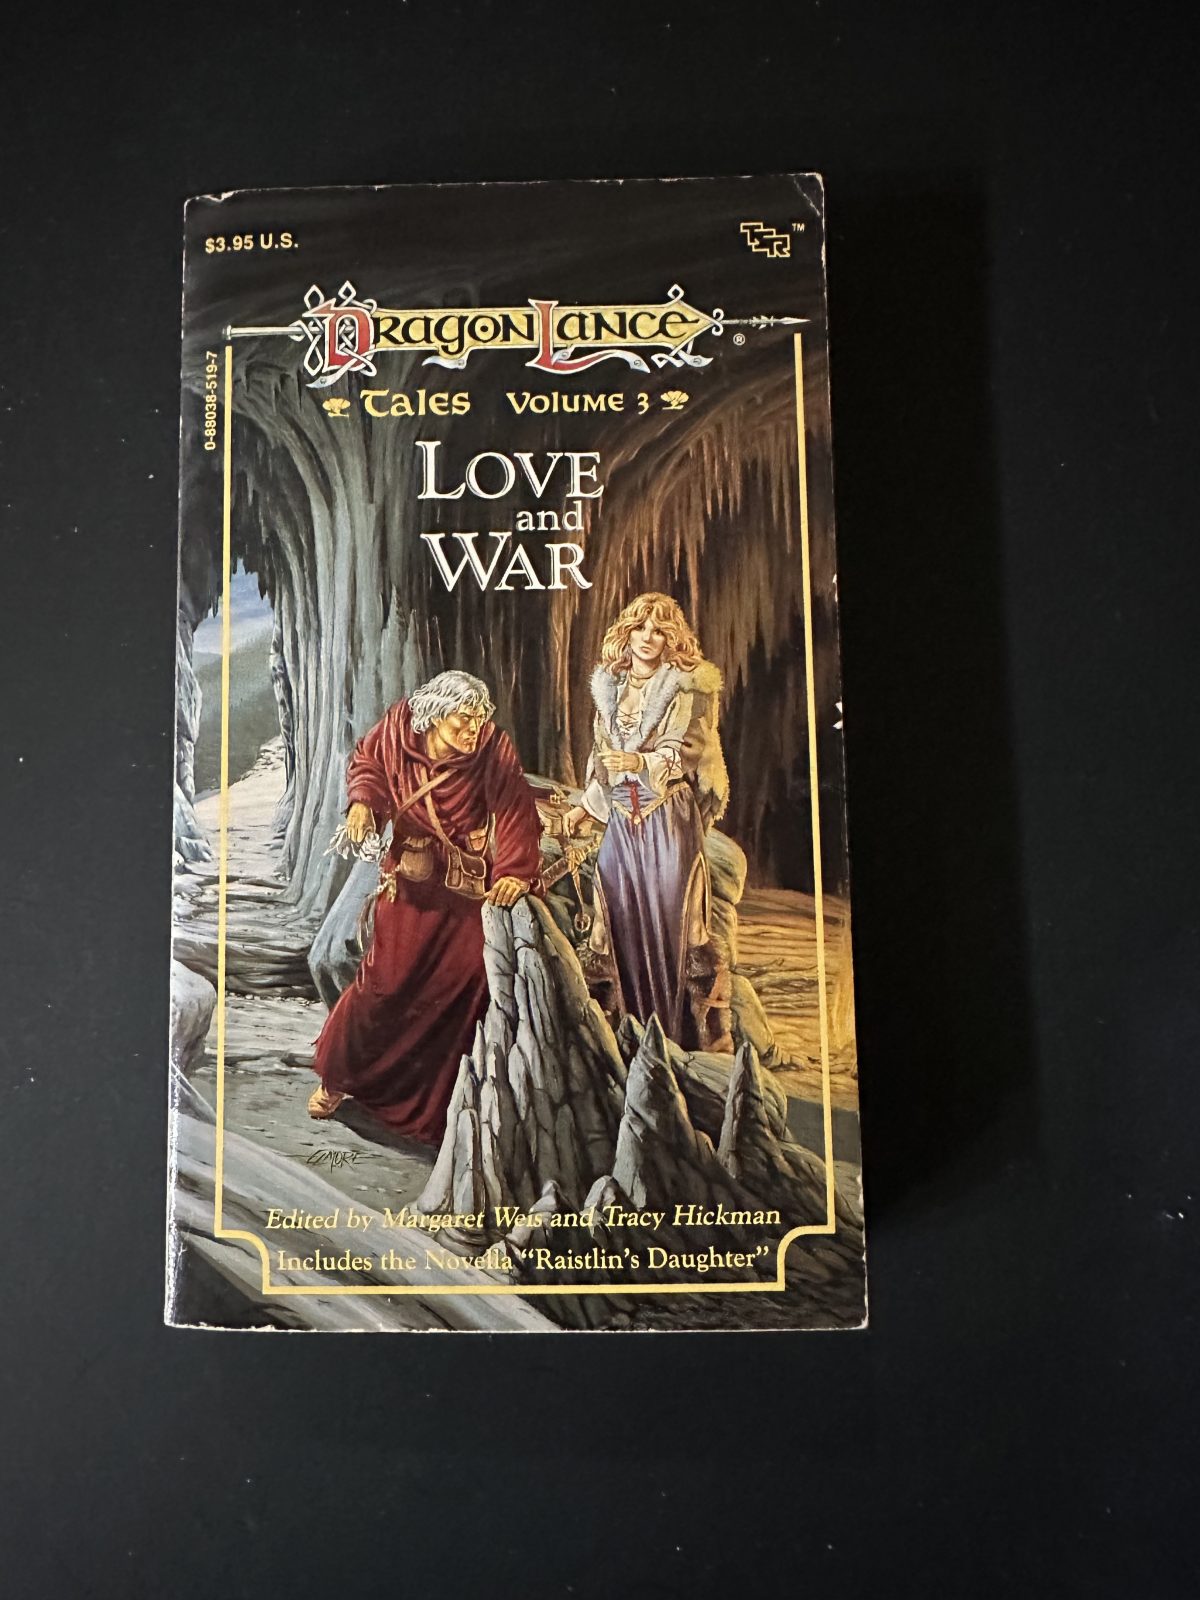 DragonLance Tales Volume 3: Love and War